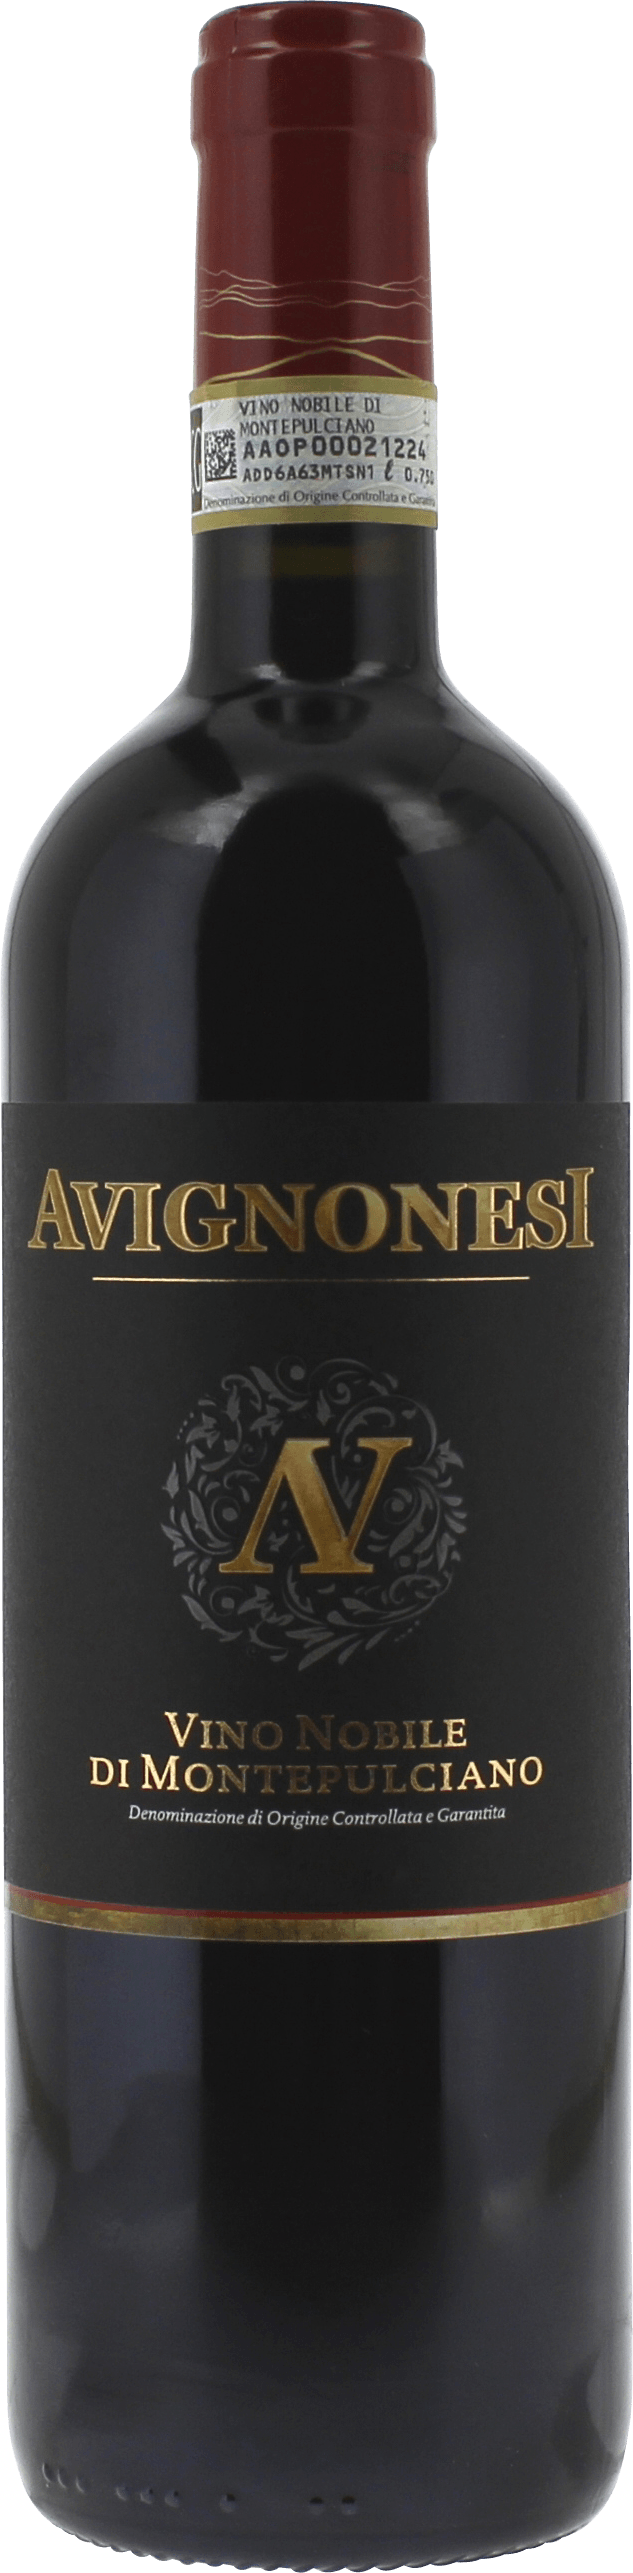 Avignonesi -  prugnolo gentile -vino nobile di montepulciano 2014  , Vin italien